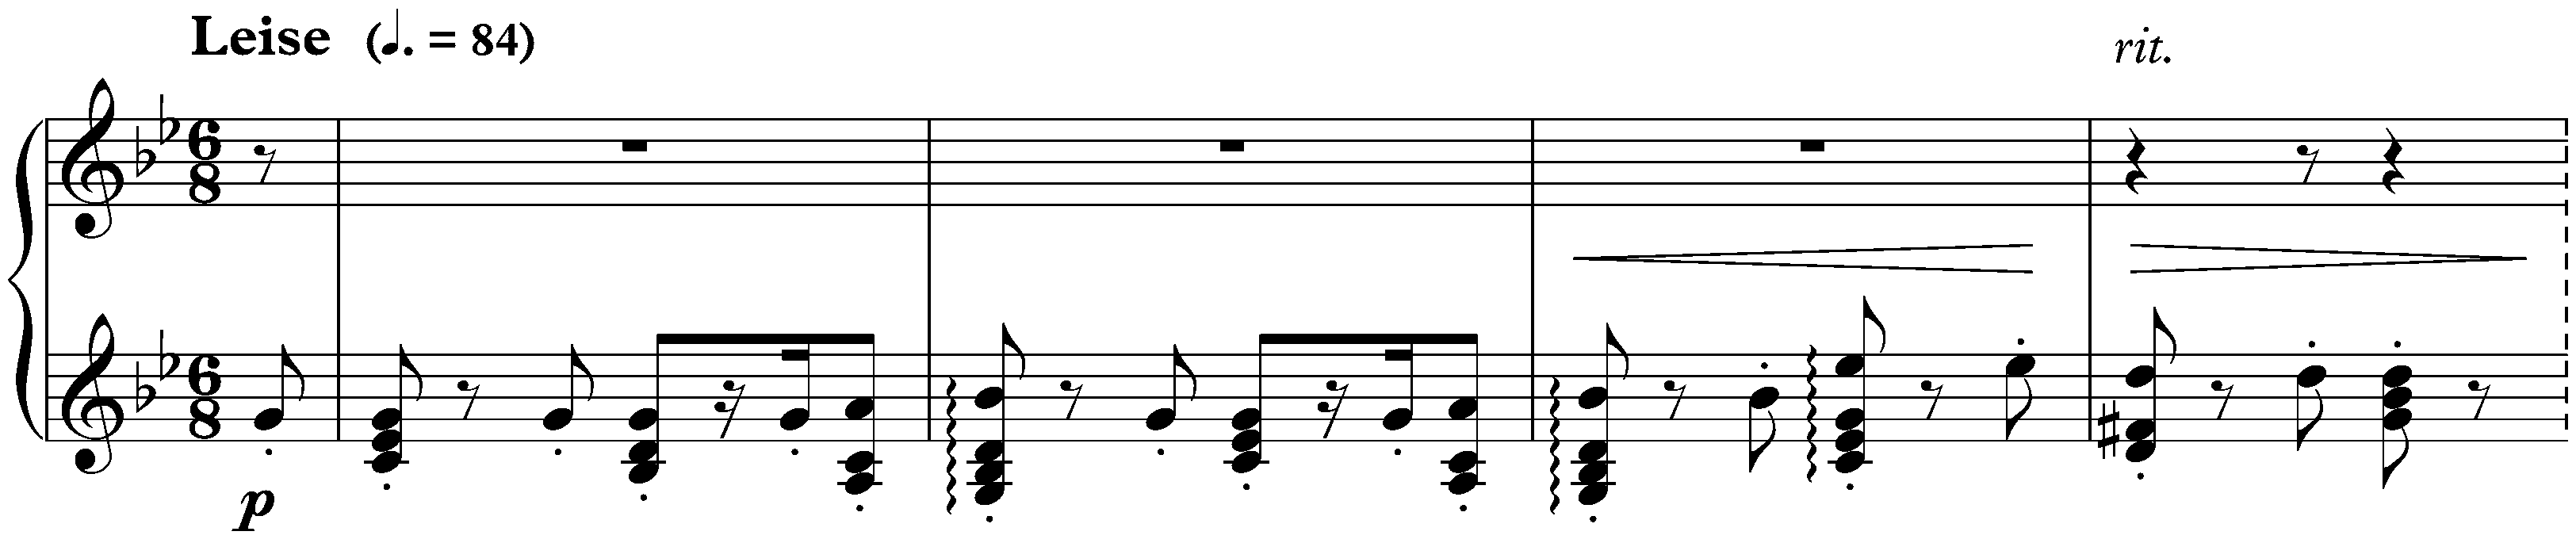 Scherzo, Gigue, Romanze und Fughette, op. 32; 4. Fughette: Leise